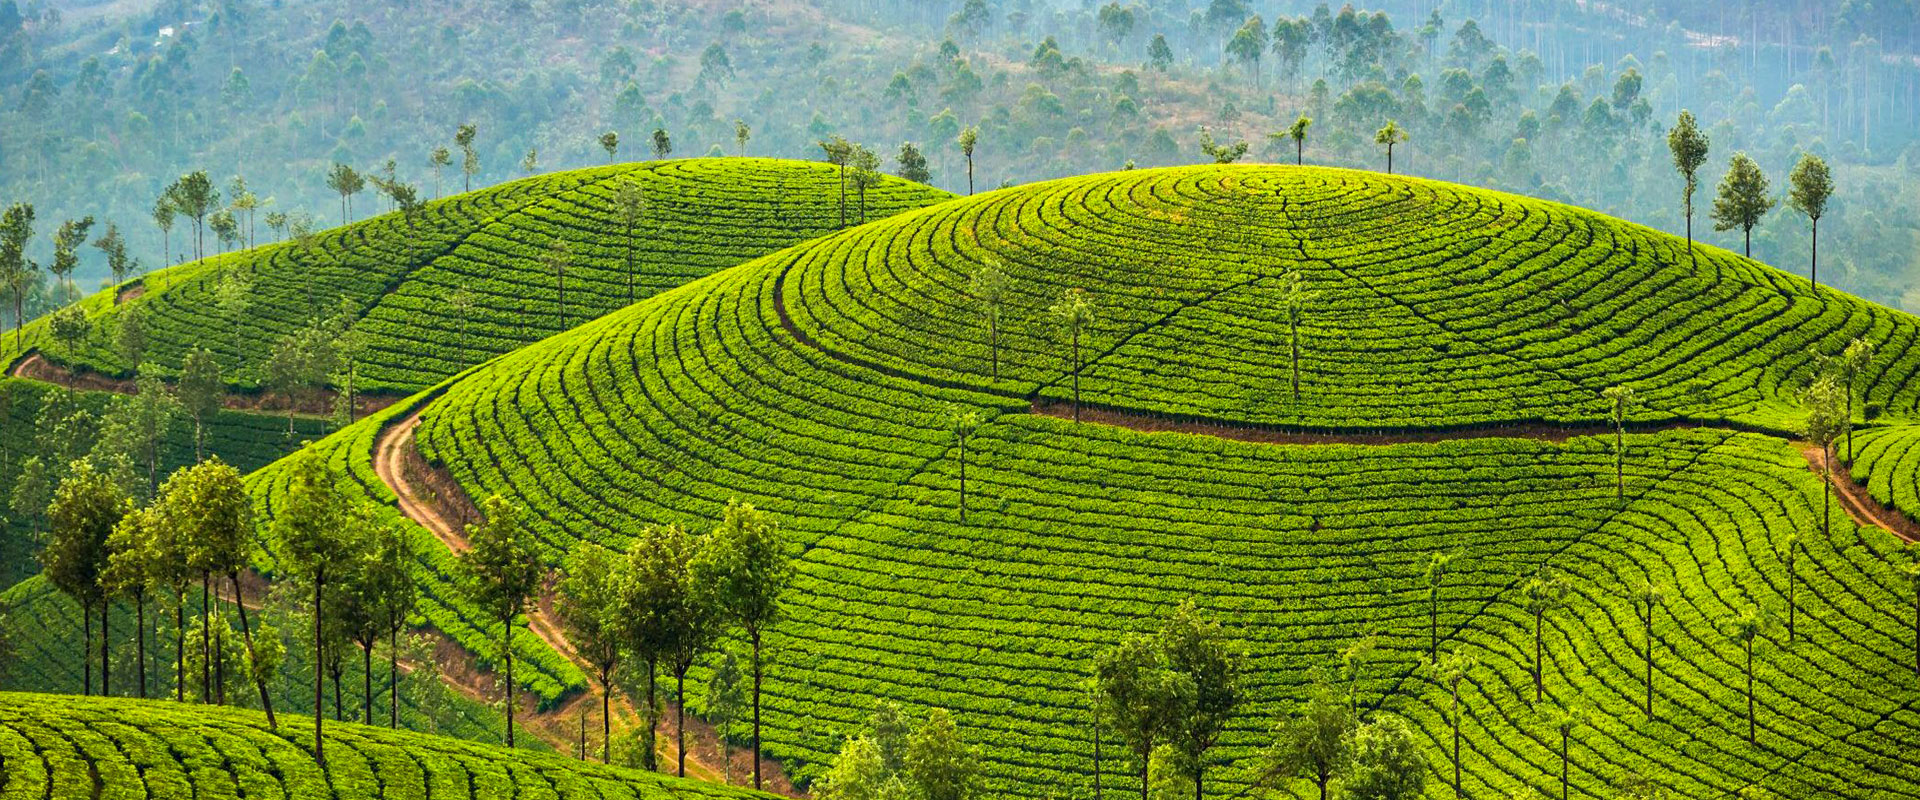 lead Tea Plantation Shutterstock Sri Lanka